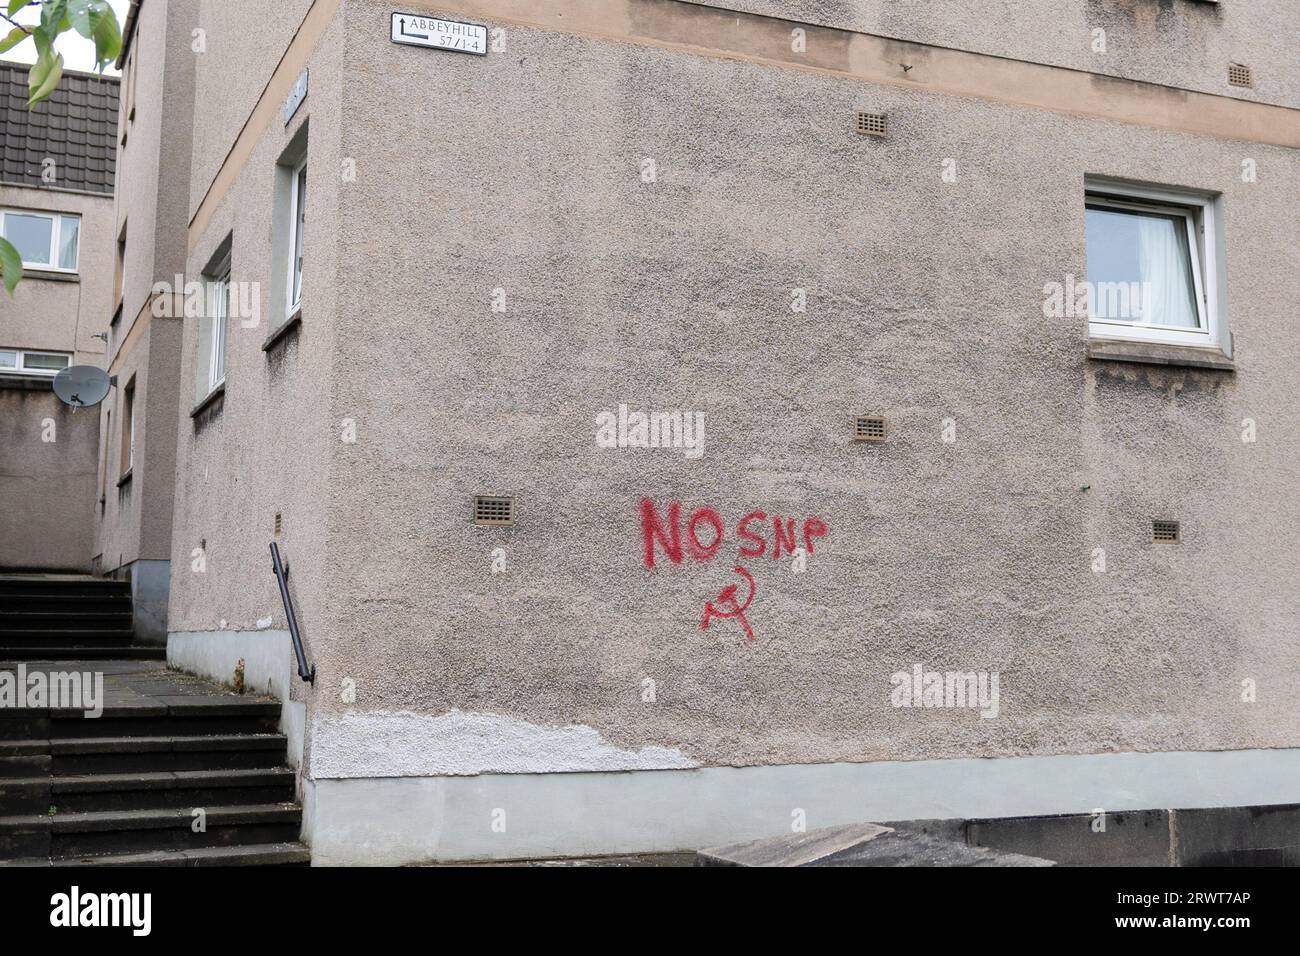 Anti SNP graffiti spray painted on housing block in Edinburgh, Scotland, UK Stock Photo